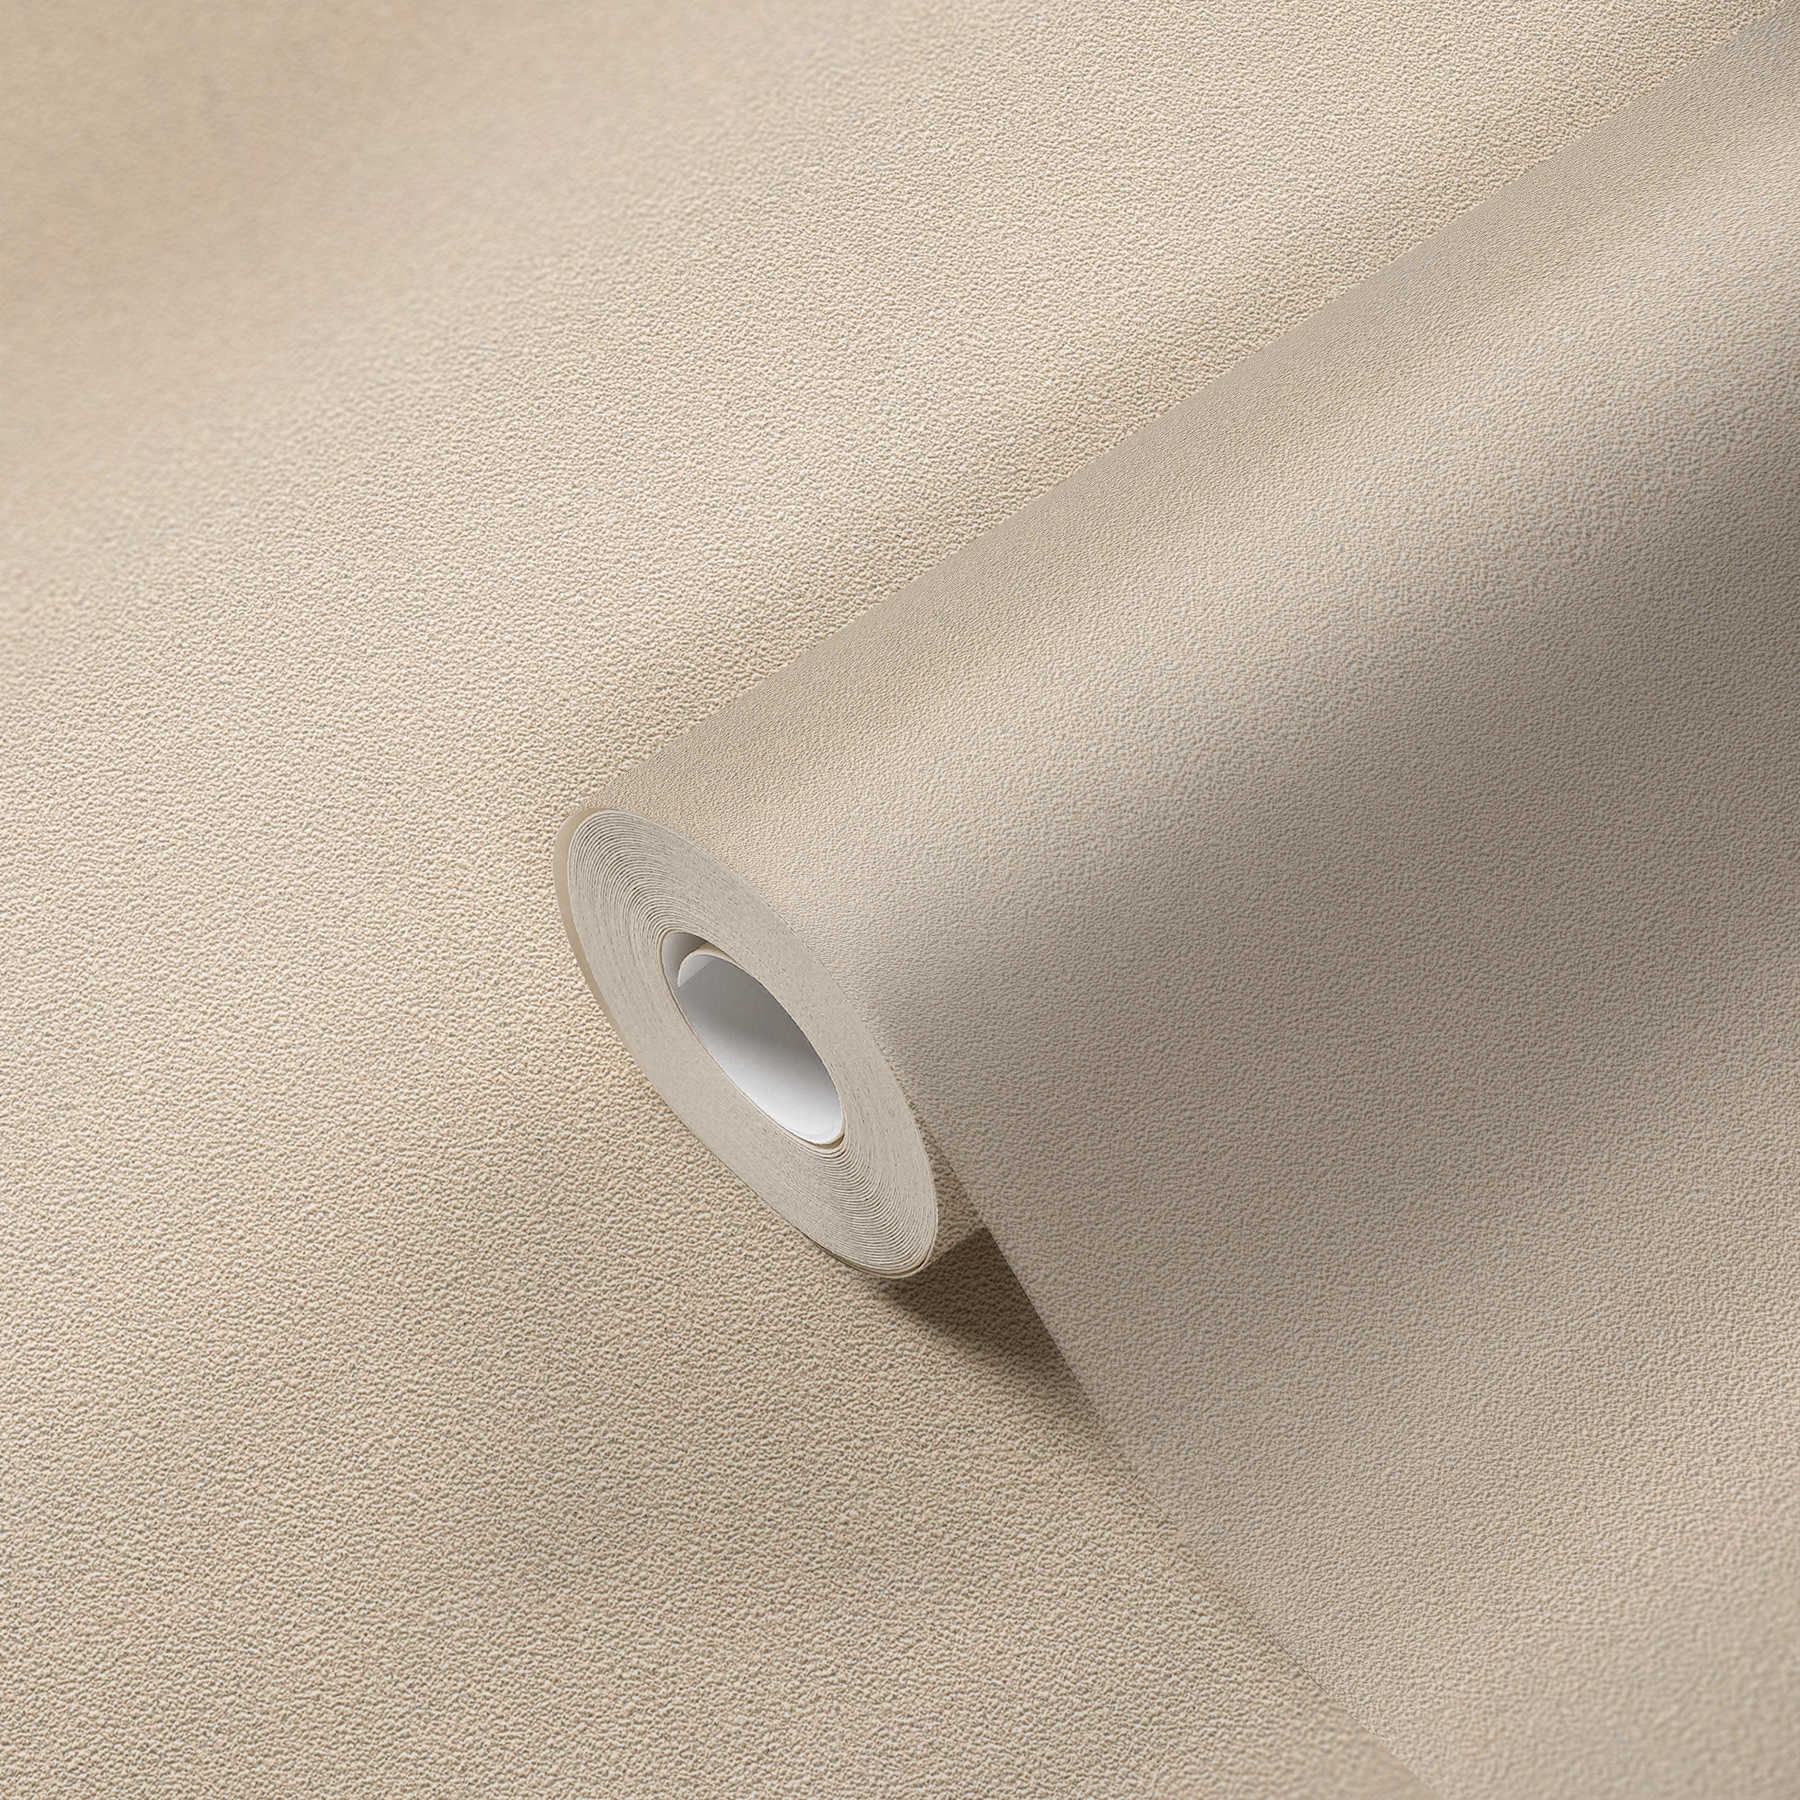             Plain wallpaper natural colour and texture pattern - beige
        